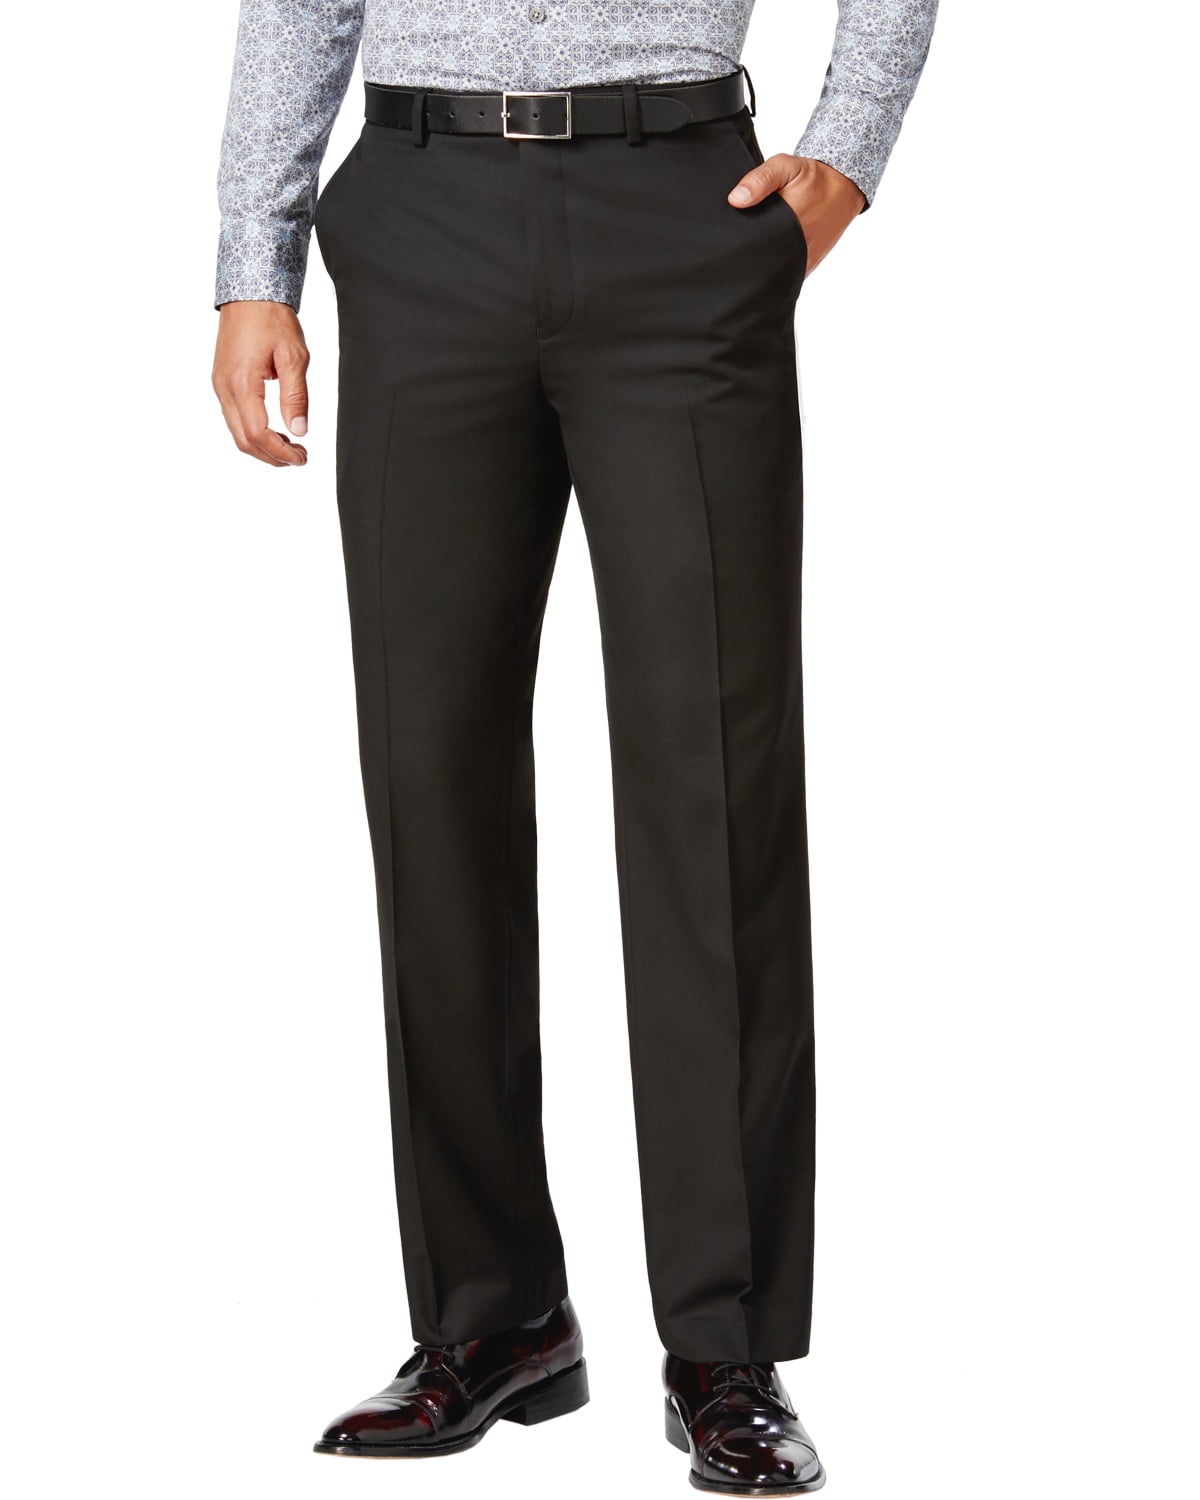 Sean John - Sean John Mens Classic-Fit Dress Pants 36W x 30L Black ...